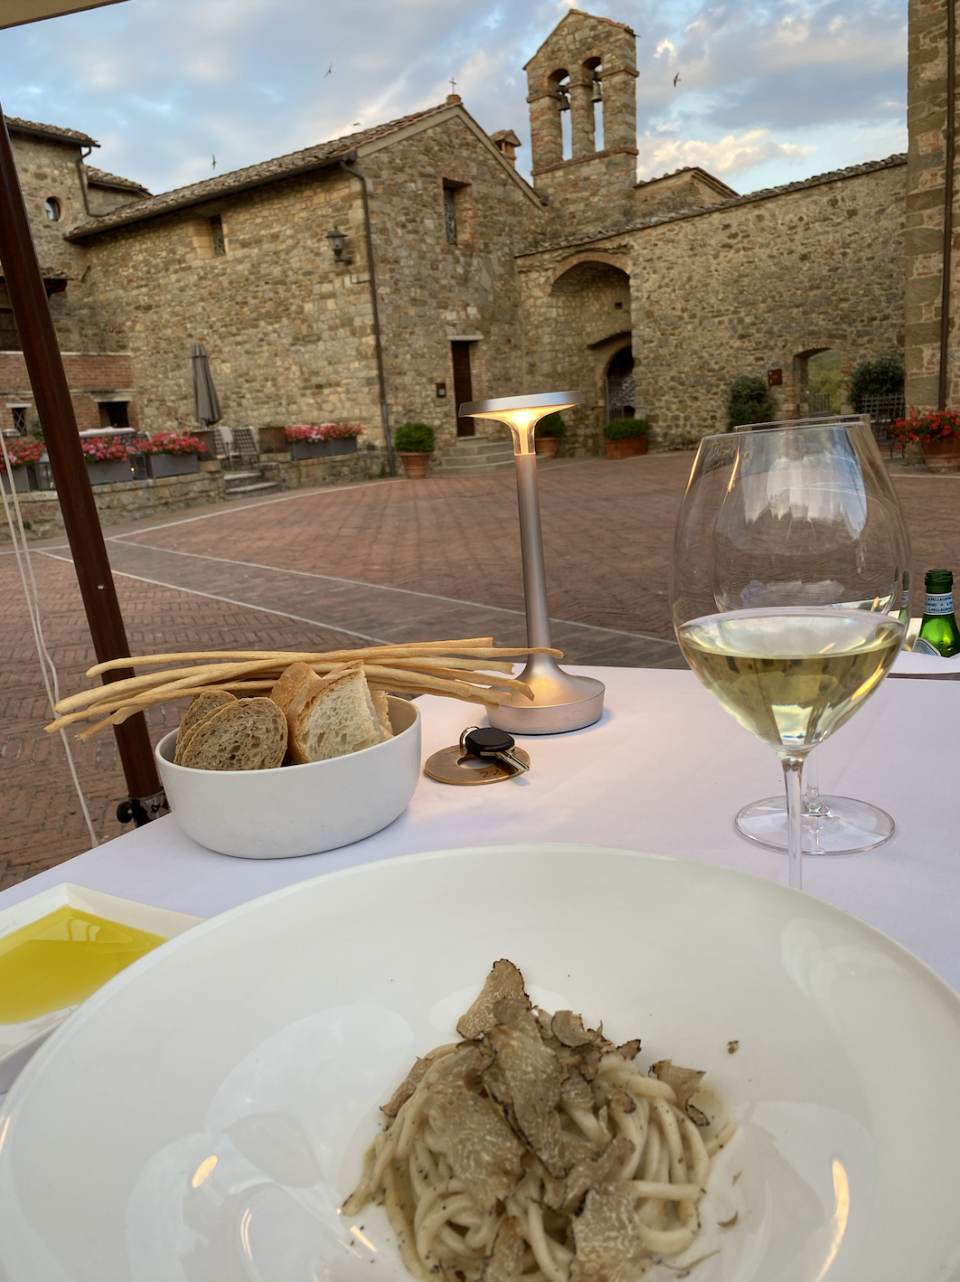 “I ate the cacio e pepe multiple nights in a row at Castel Monastero,” says Brown.